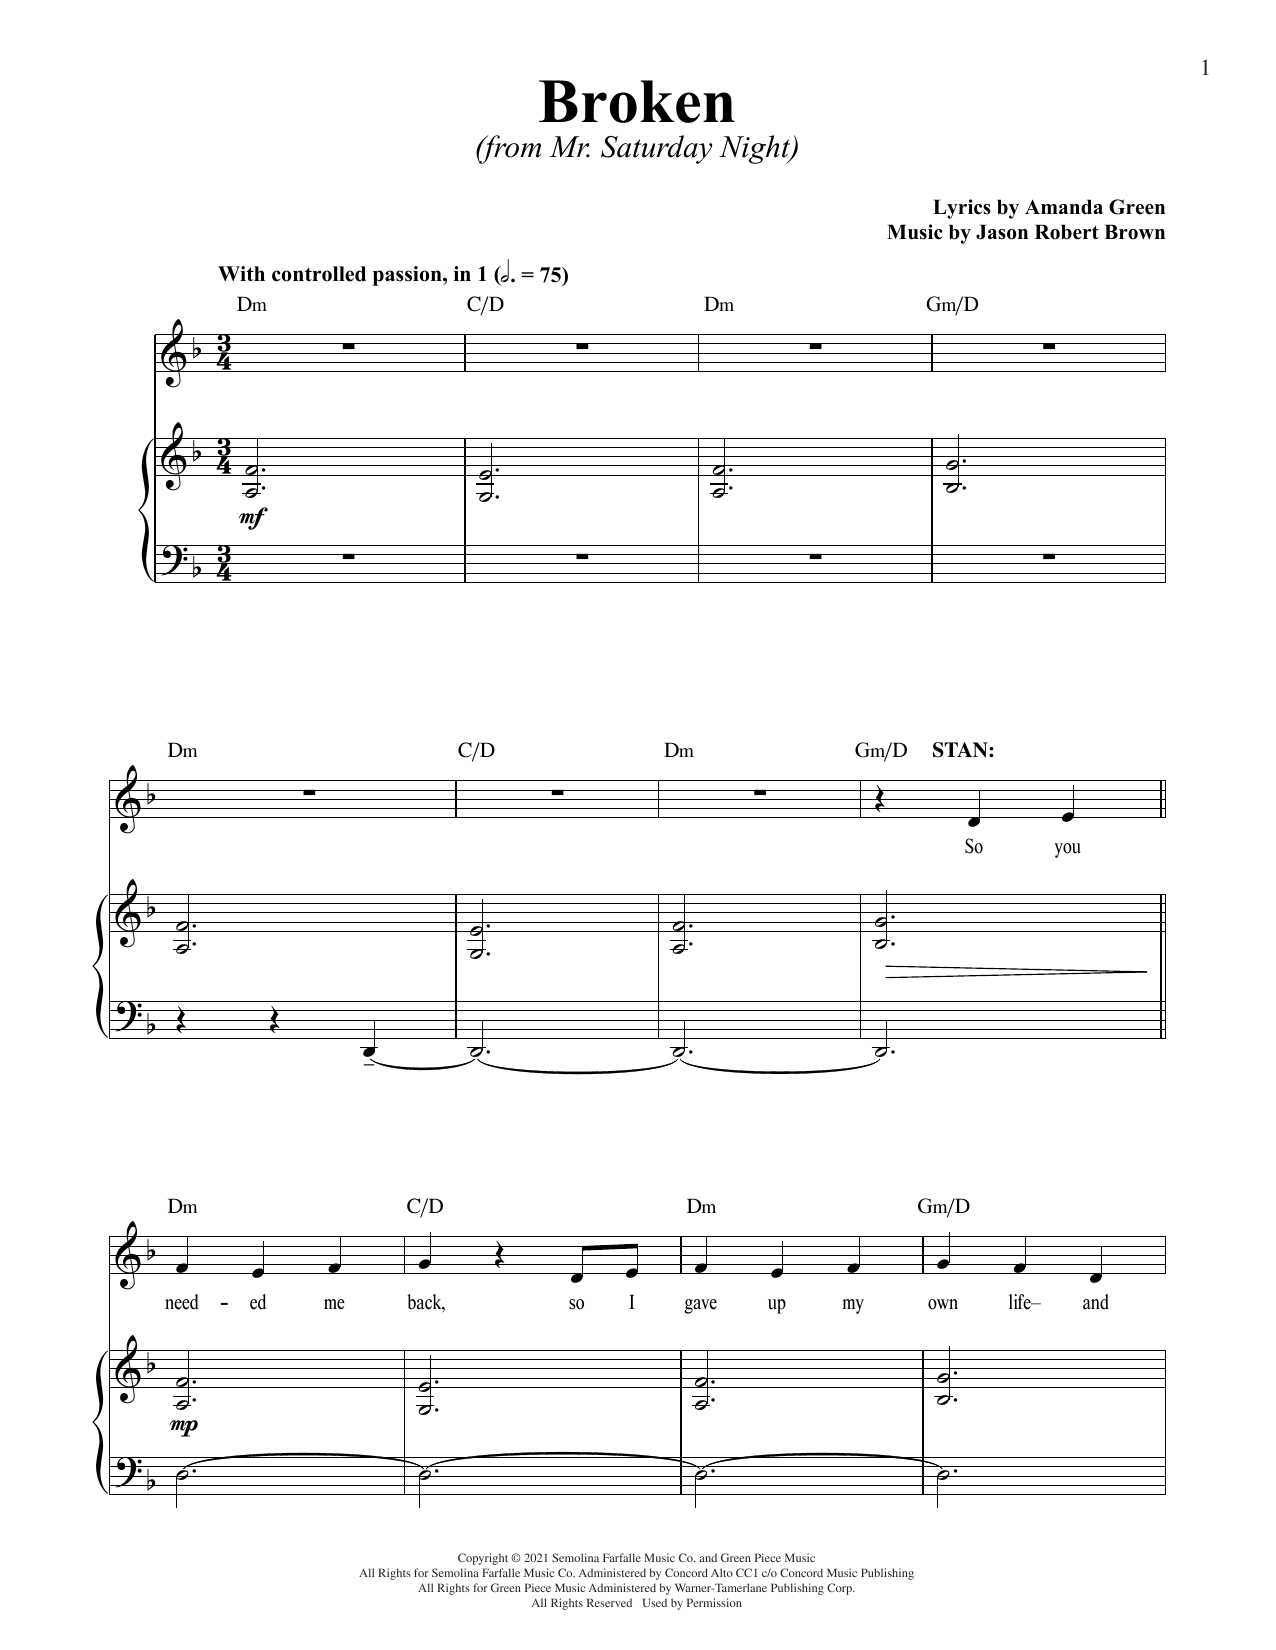 Jason Robert Brown and Amanda Green Broken (from Mr. Saturday Night) sheet music notes printable PDF score